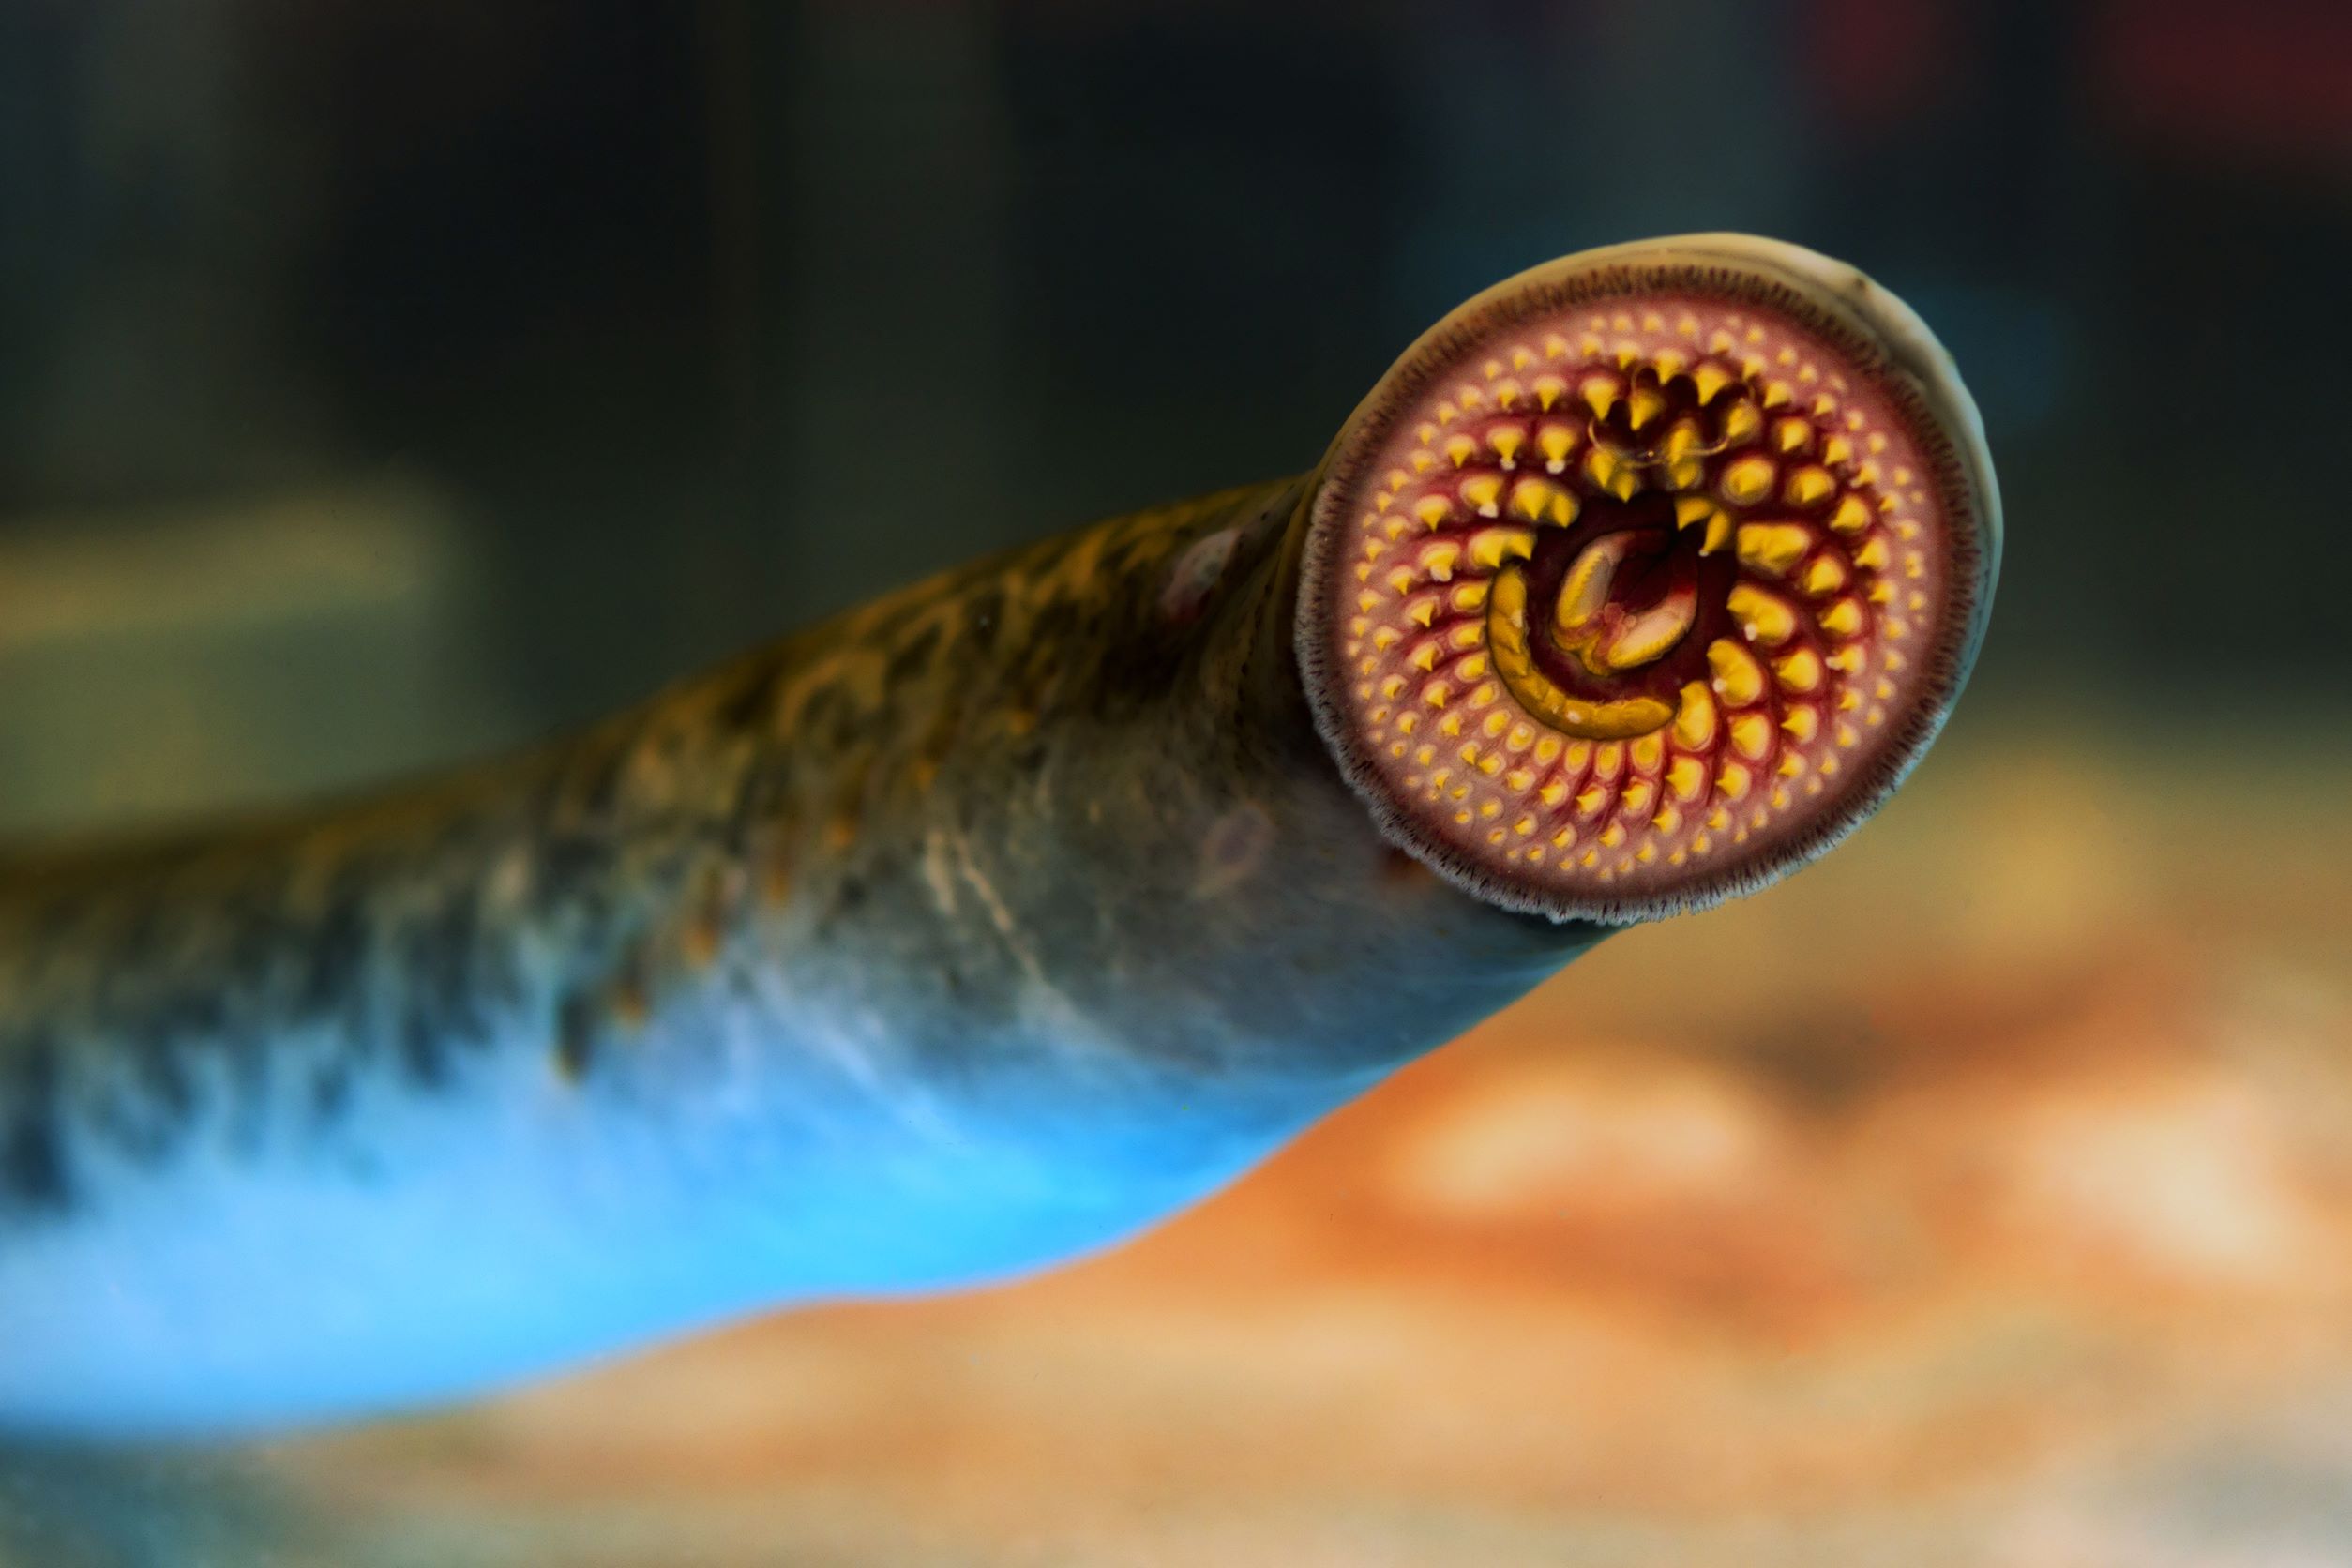 A close-up of a sea lamprey against a glass tank.